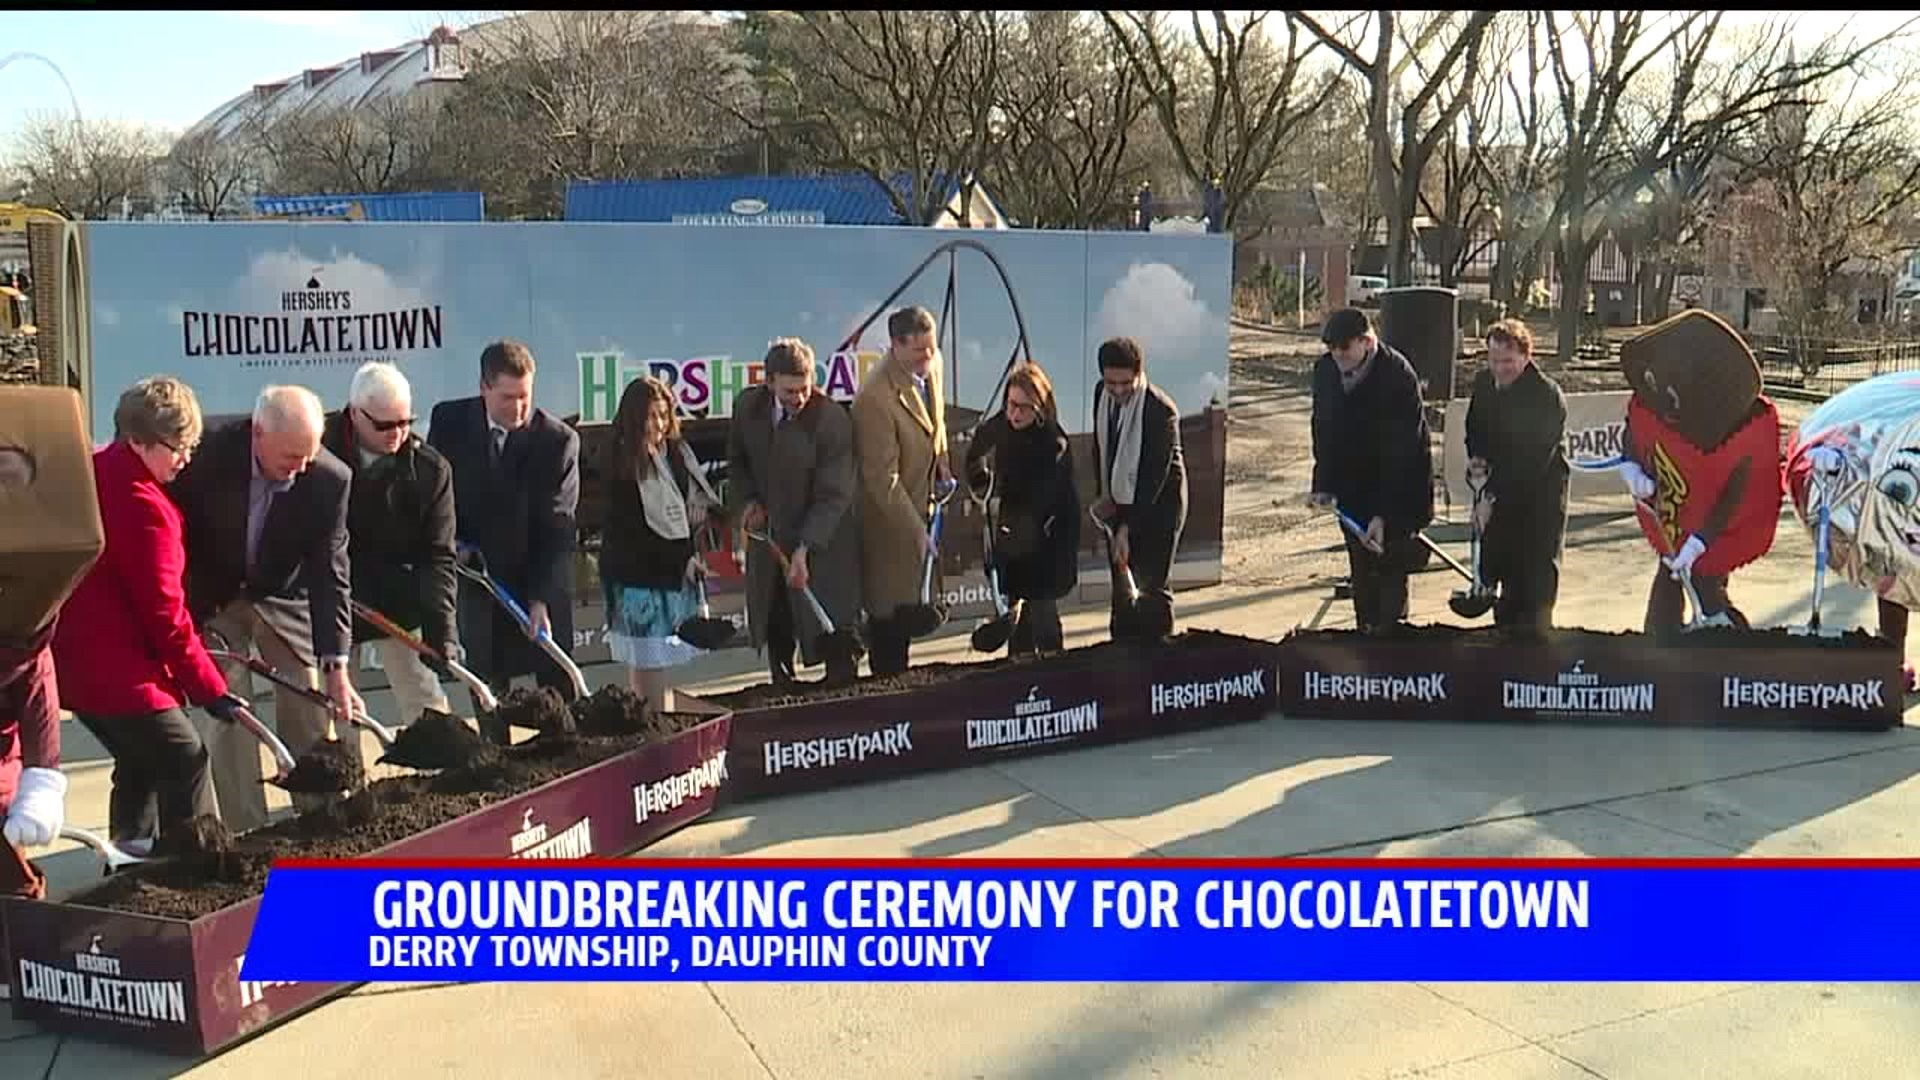 Groundbreaking ceremony for Chocolatetown